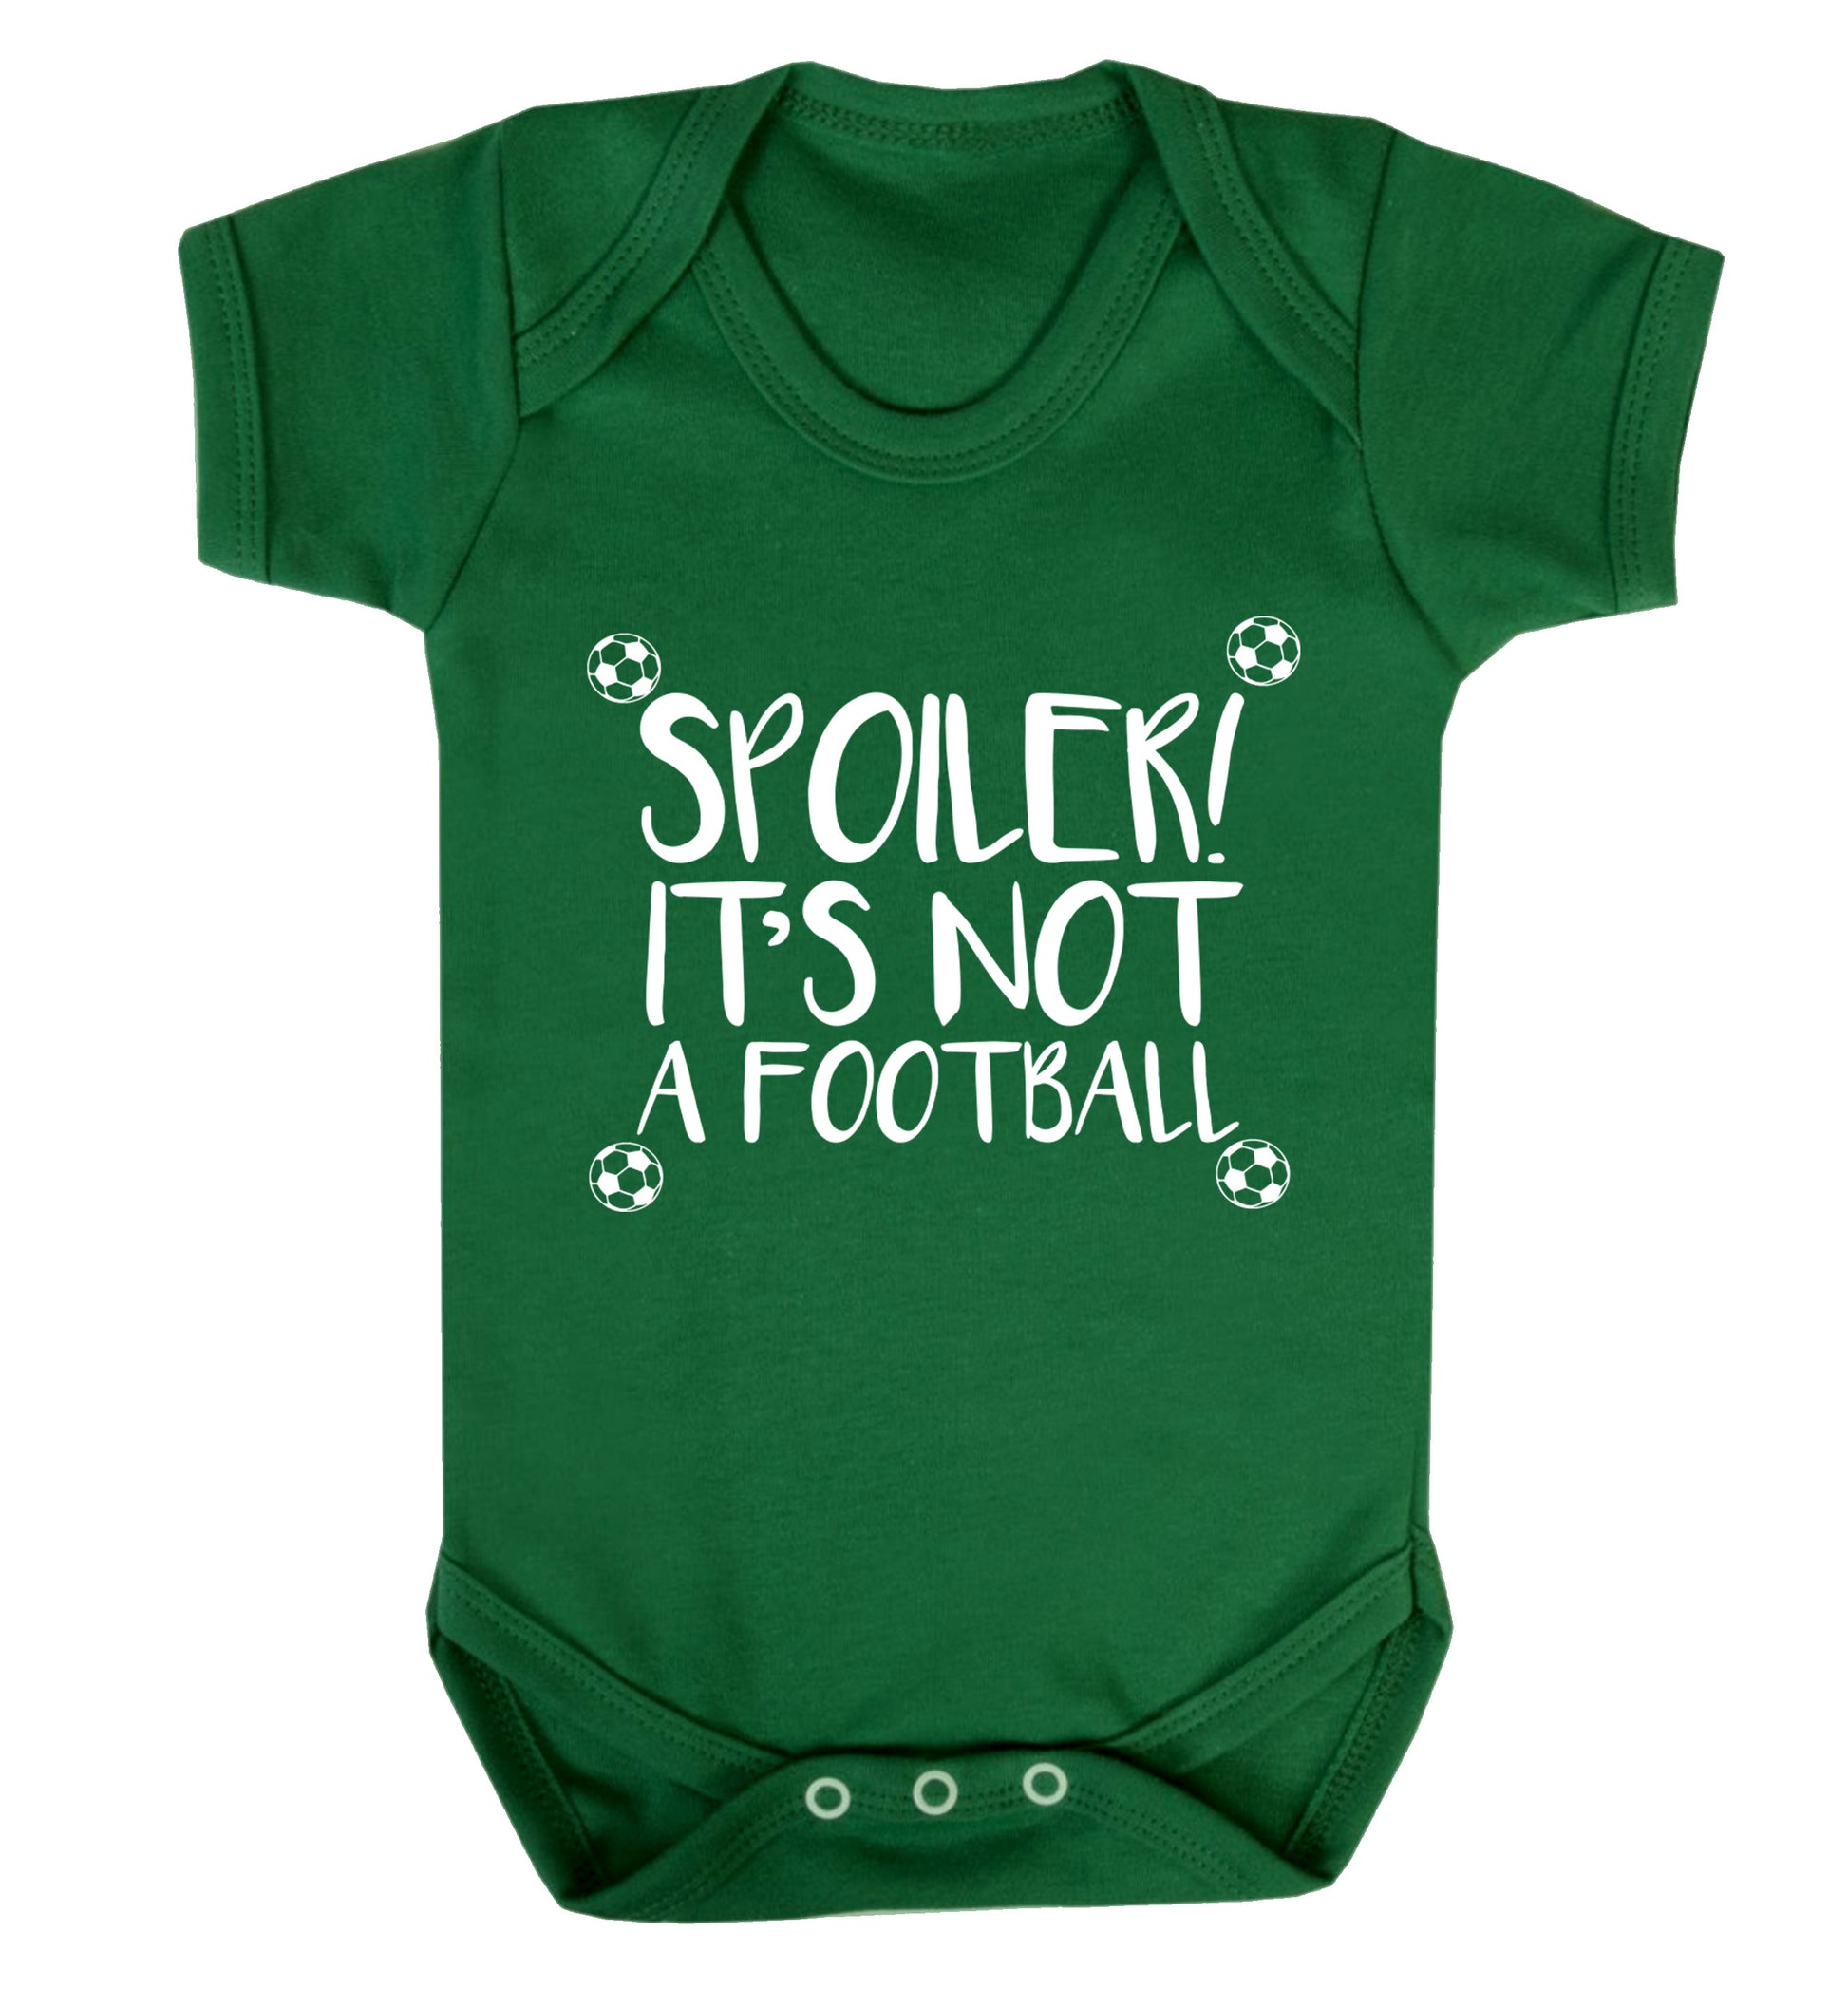 Spoiler it's not a football Baby Vest green 18-24 months